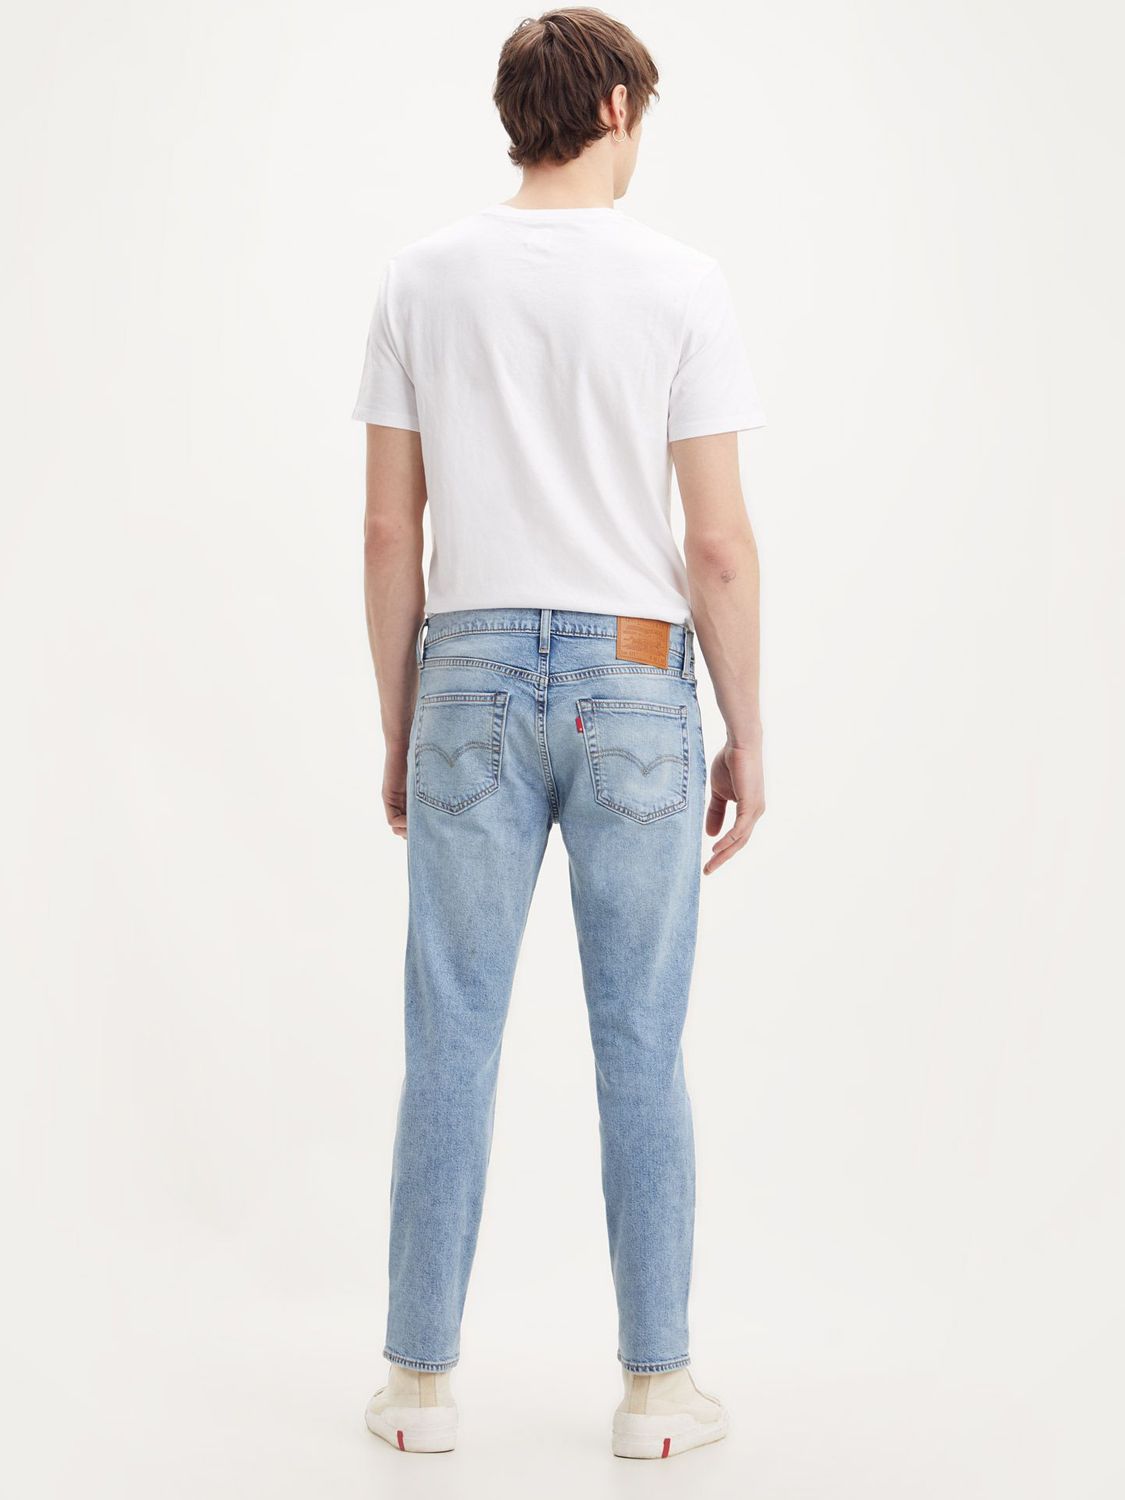 Levi's 511 Slim Fit Jeans, Indigo Destruct